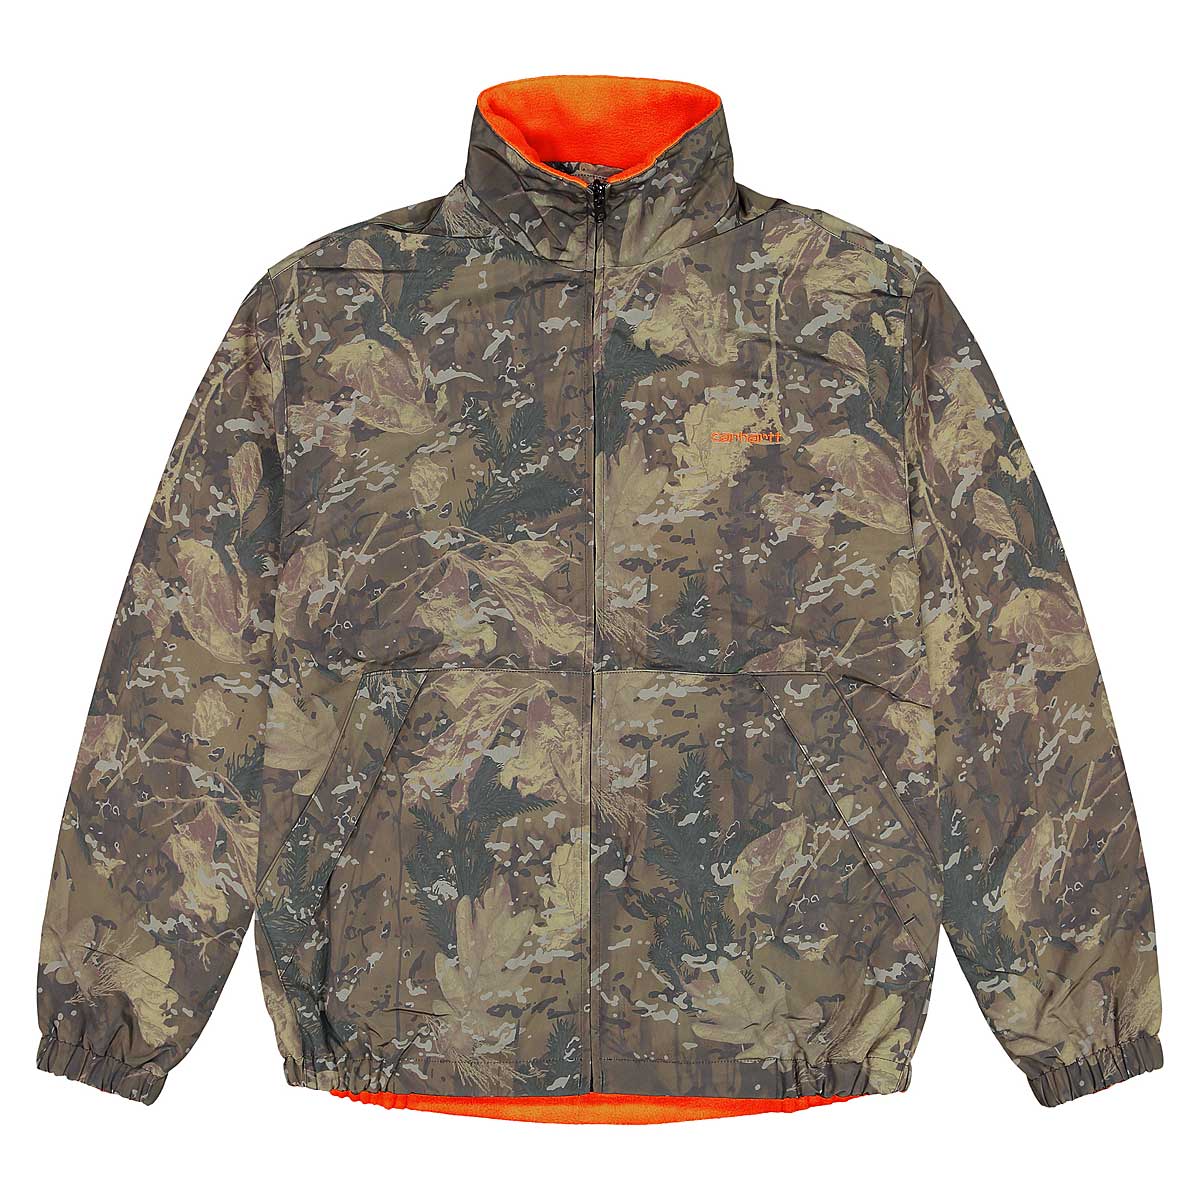 Carhartt Wip Denby Reversible Jacket, Camo Combi / Safety Orange